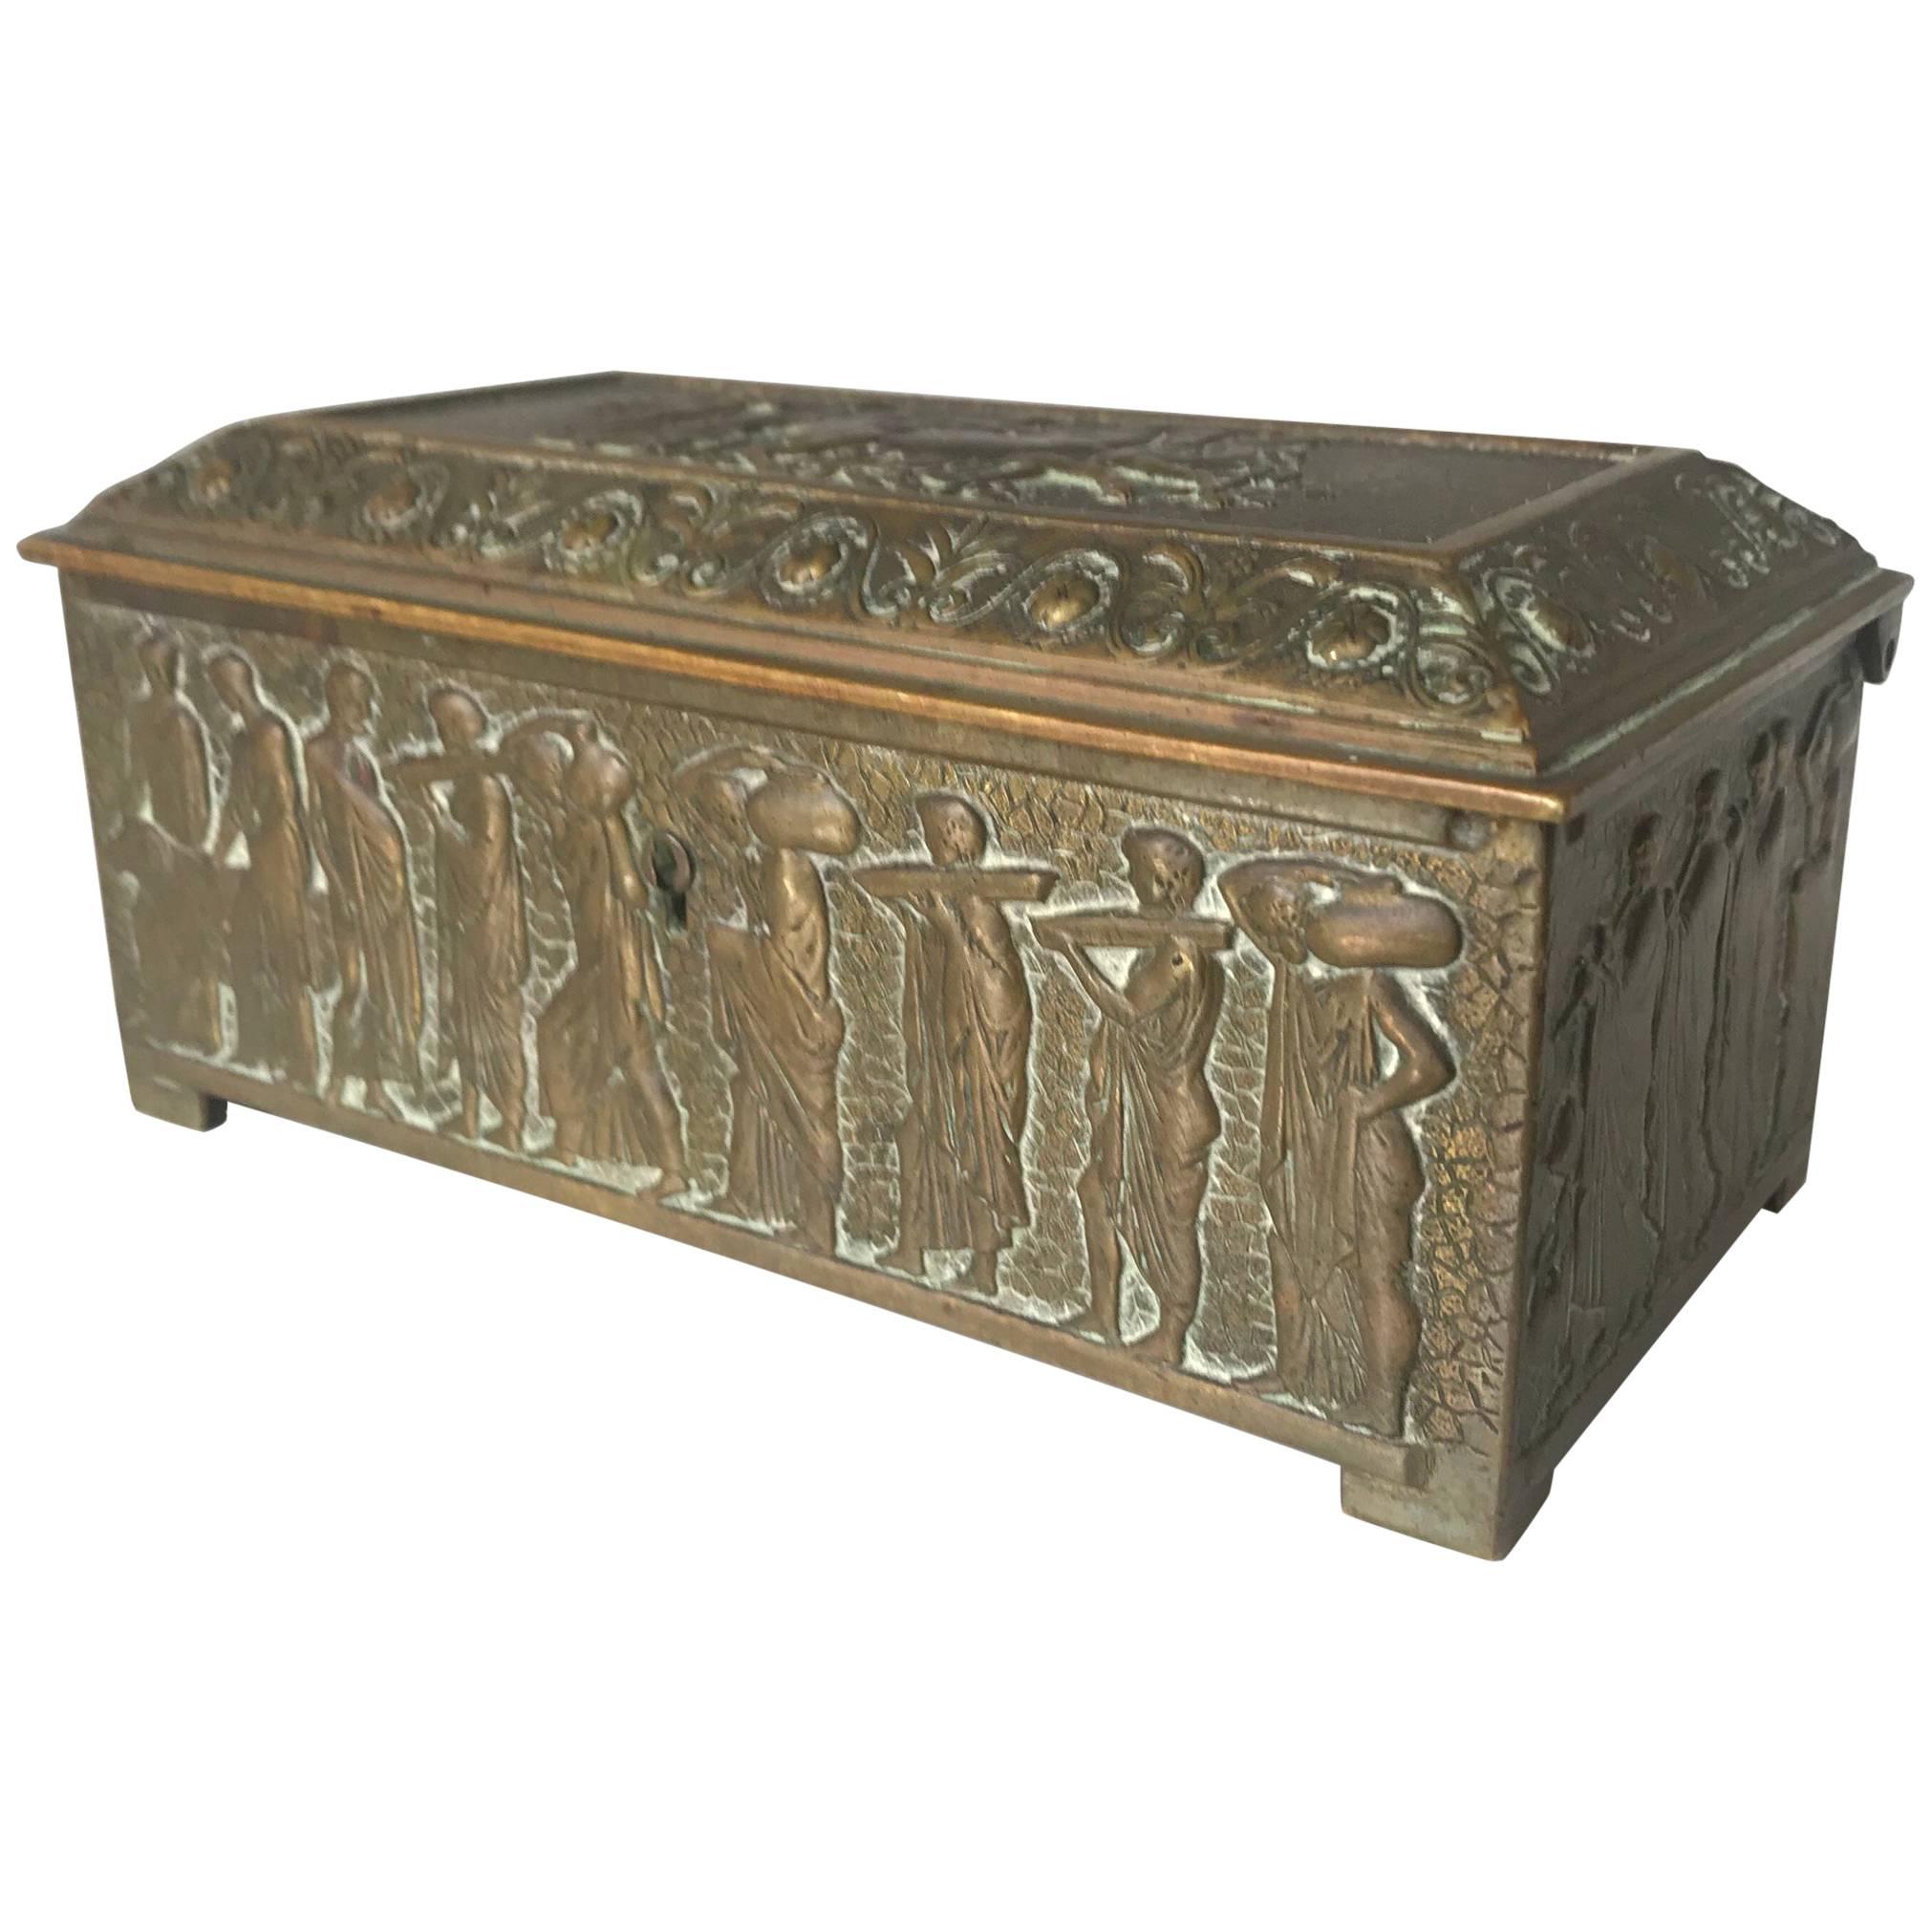 Rare Bronze Sculptural Casket / Box Panels with Historical Roman Empire Scenes